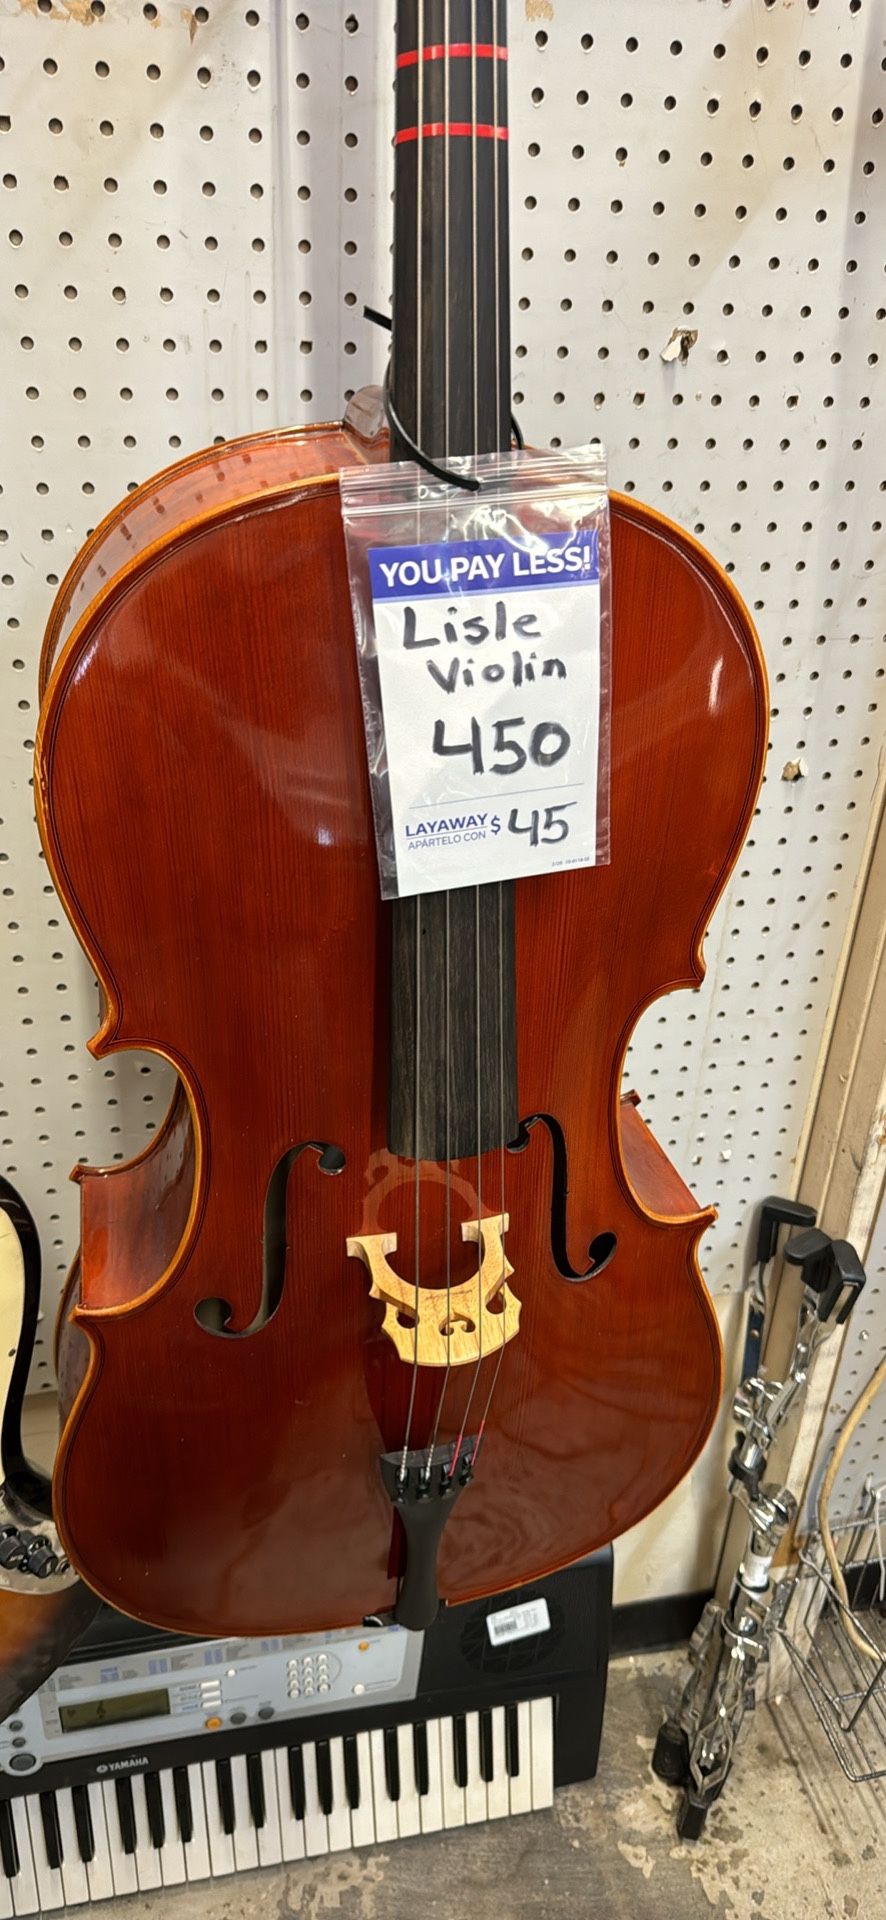 Leslie Violin 